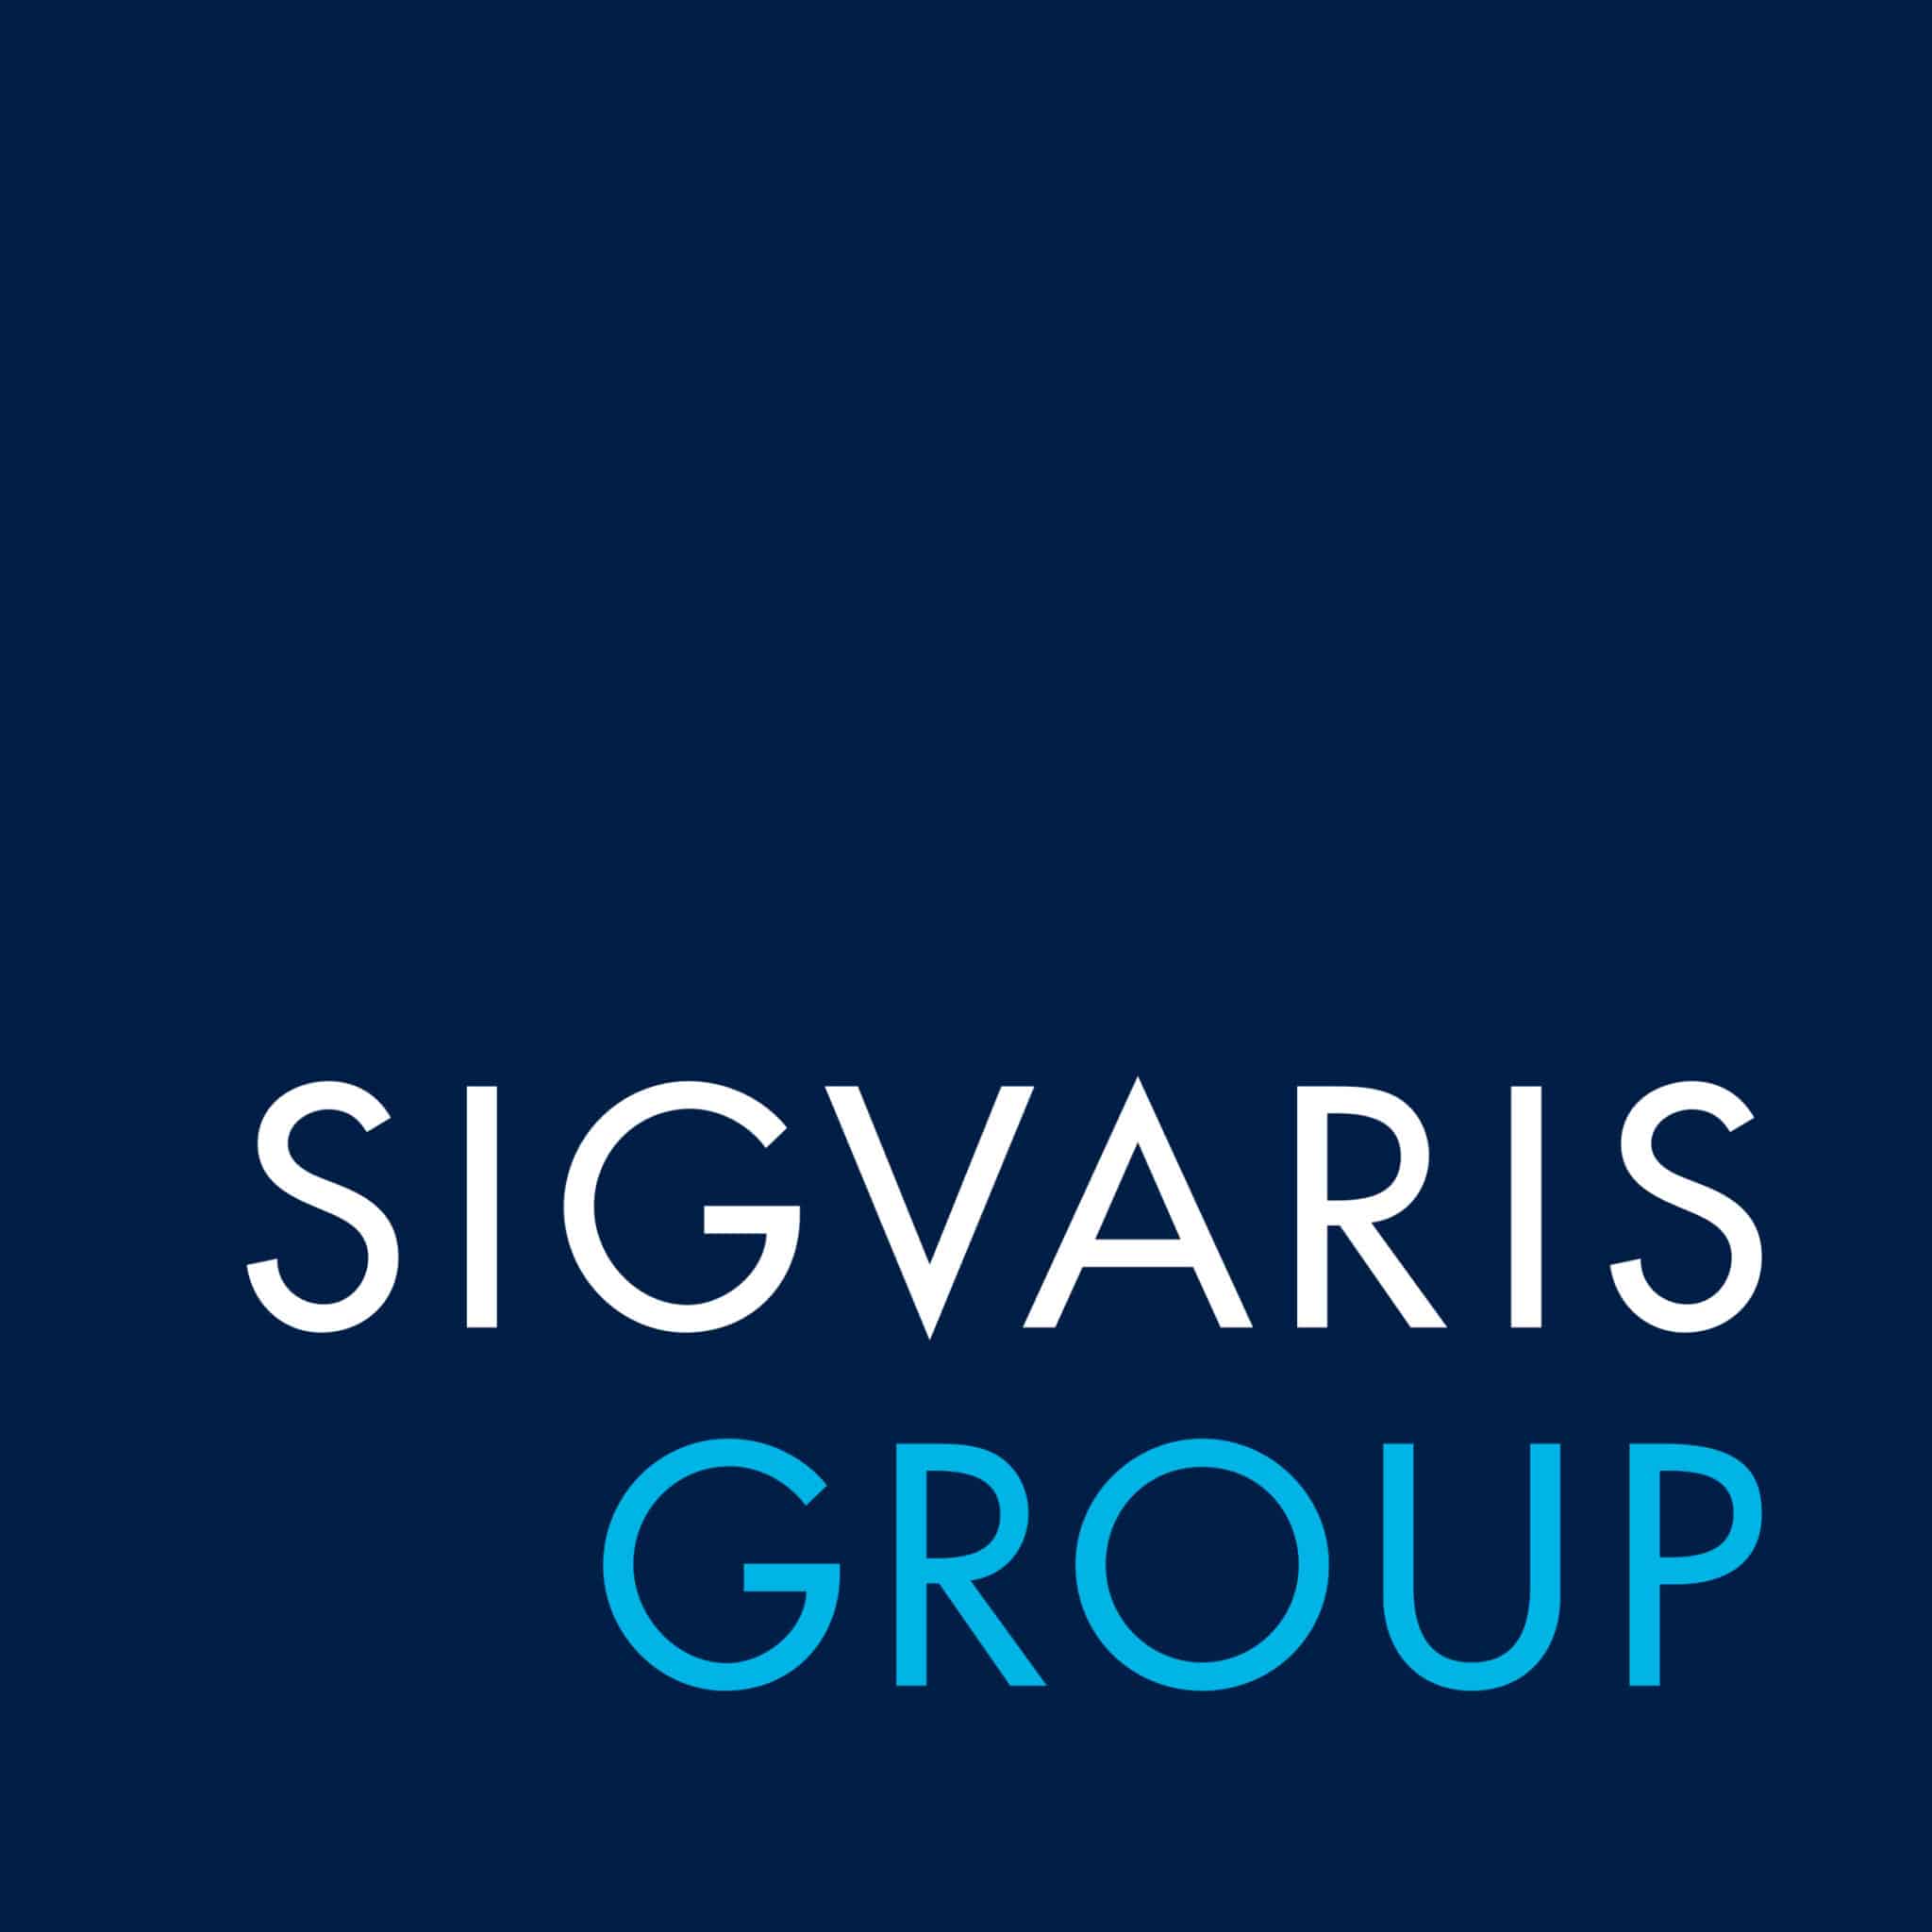 sig9000 sigvaris group logo square cmyk